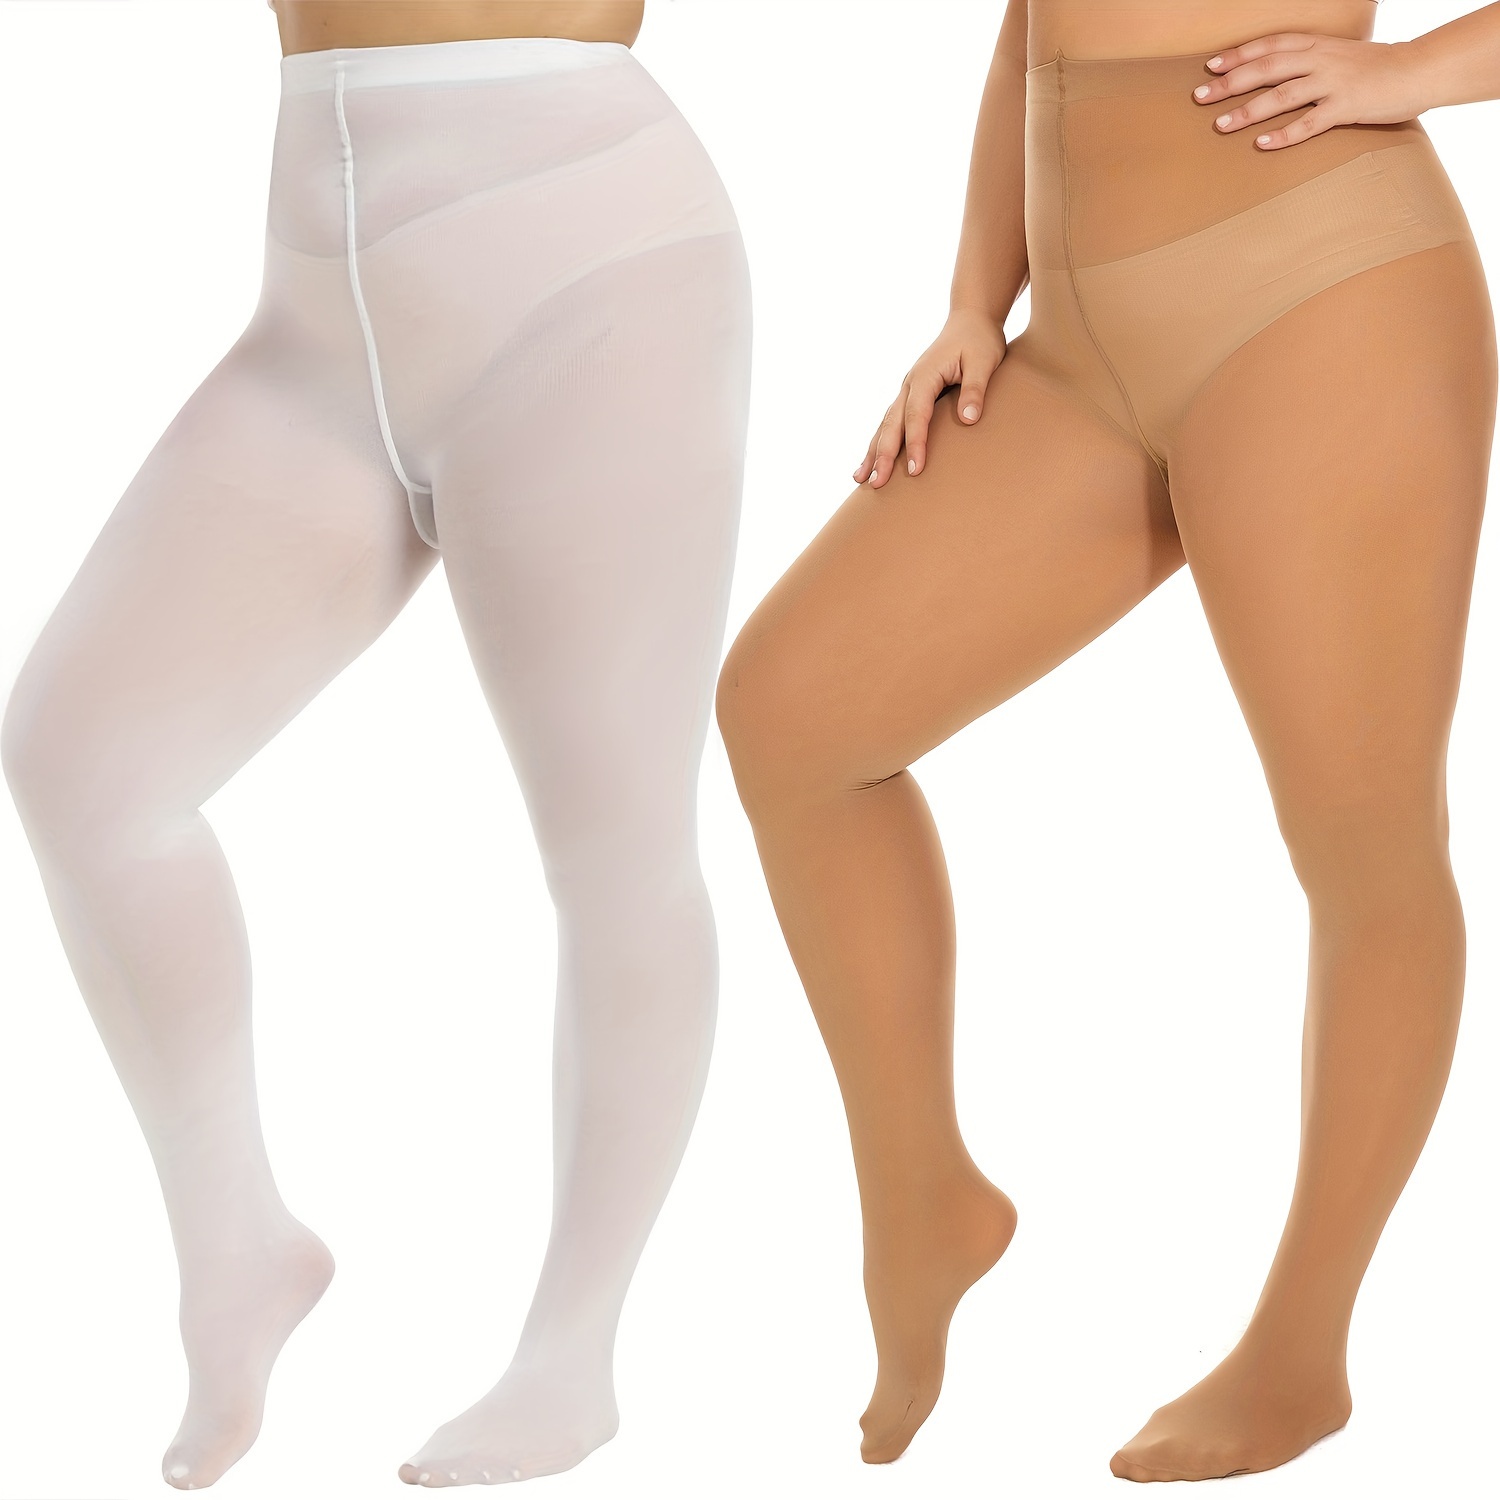 HSMQHJWE Nylons For Women Plus Size Indestructible Pantyhose Women